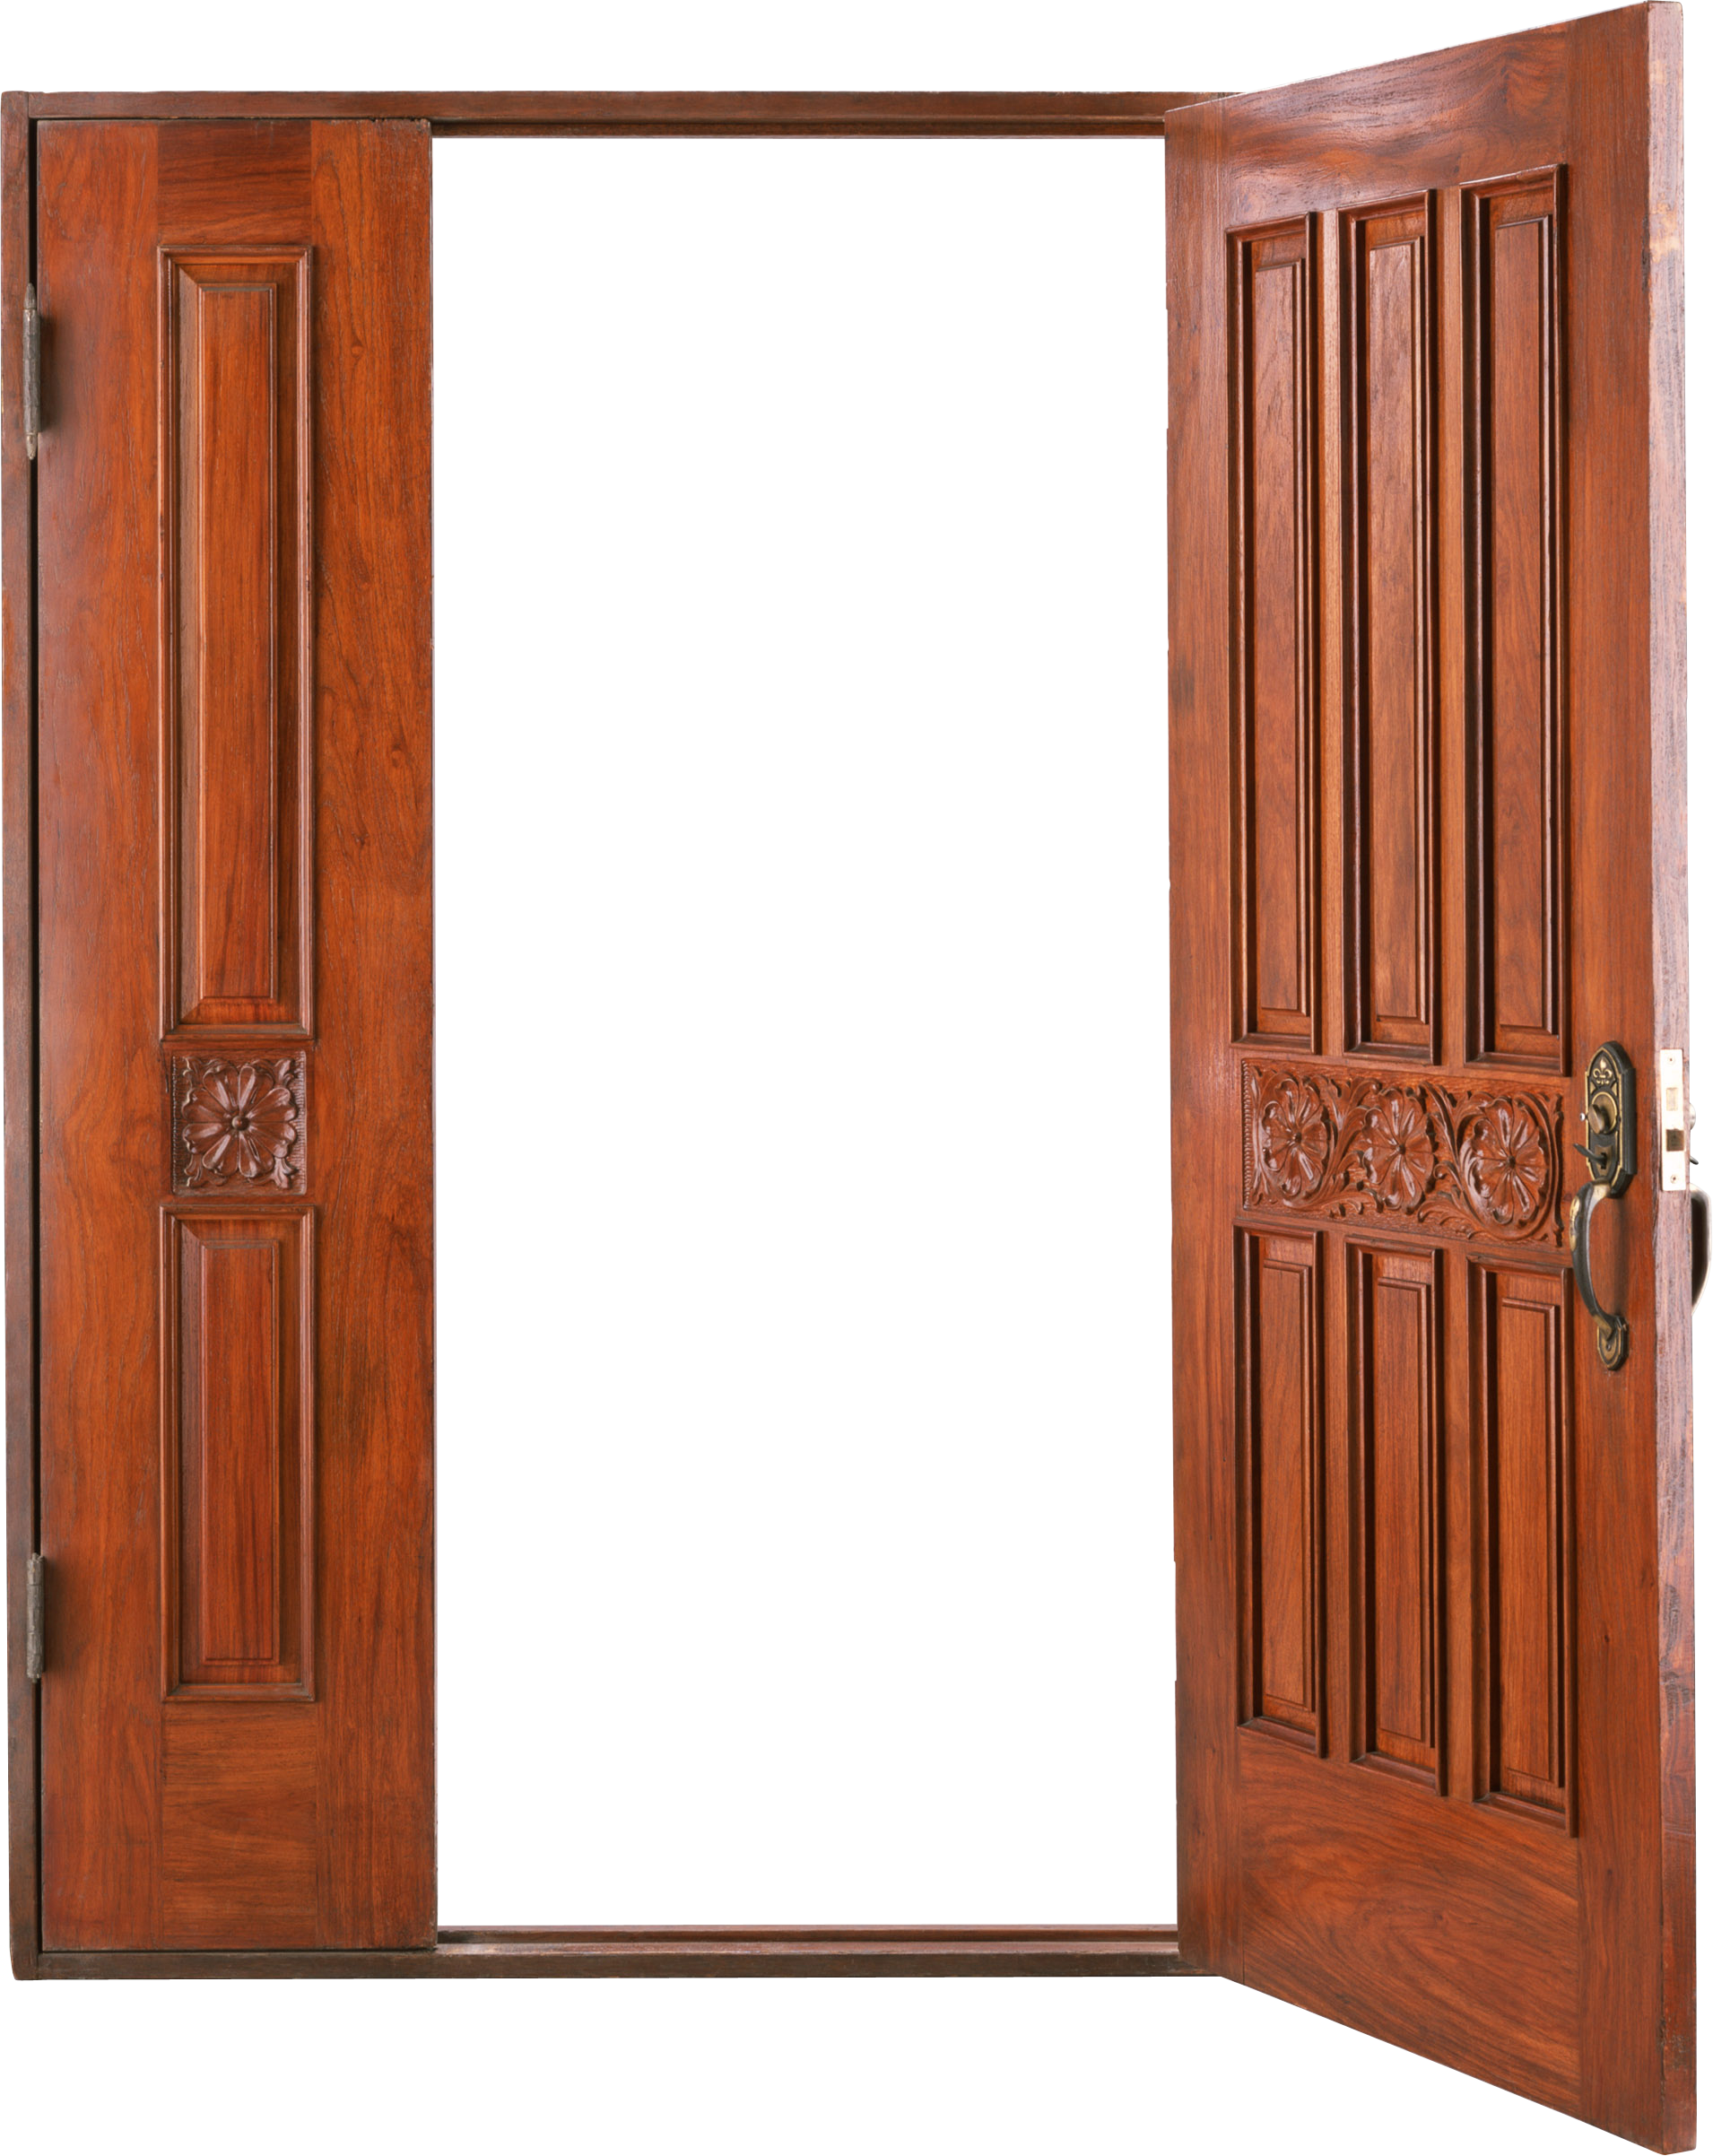 Porta de madeira aberta